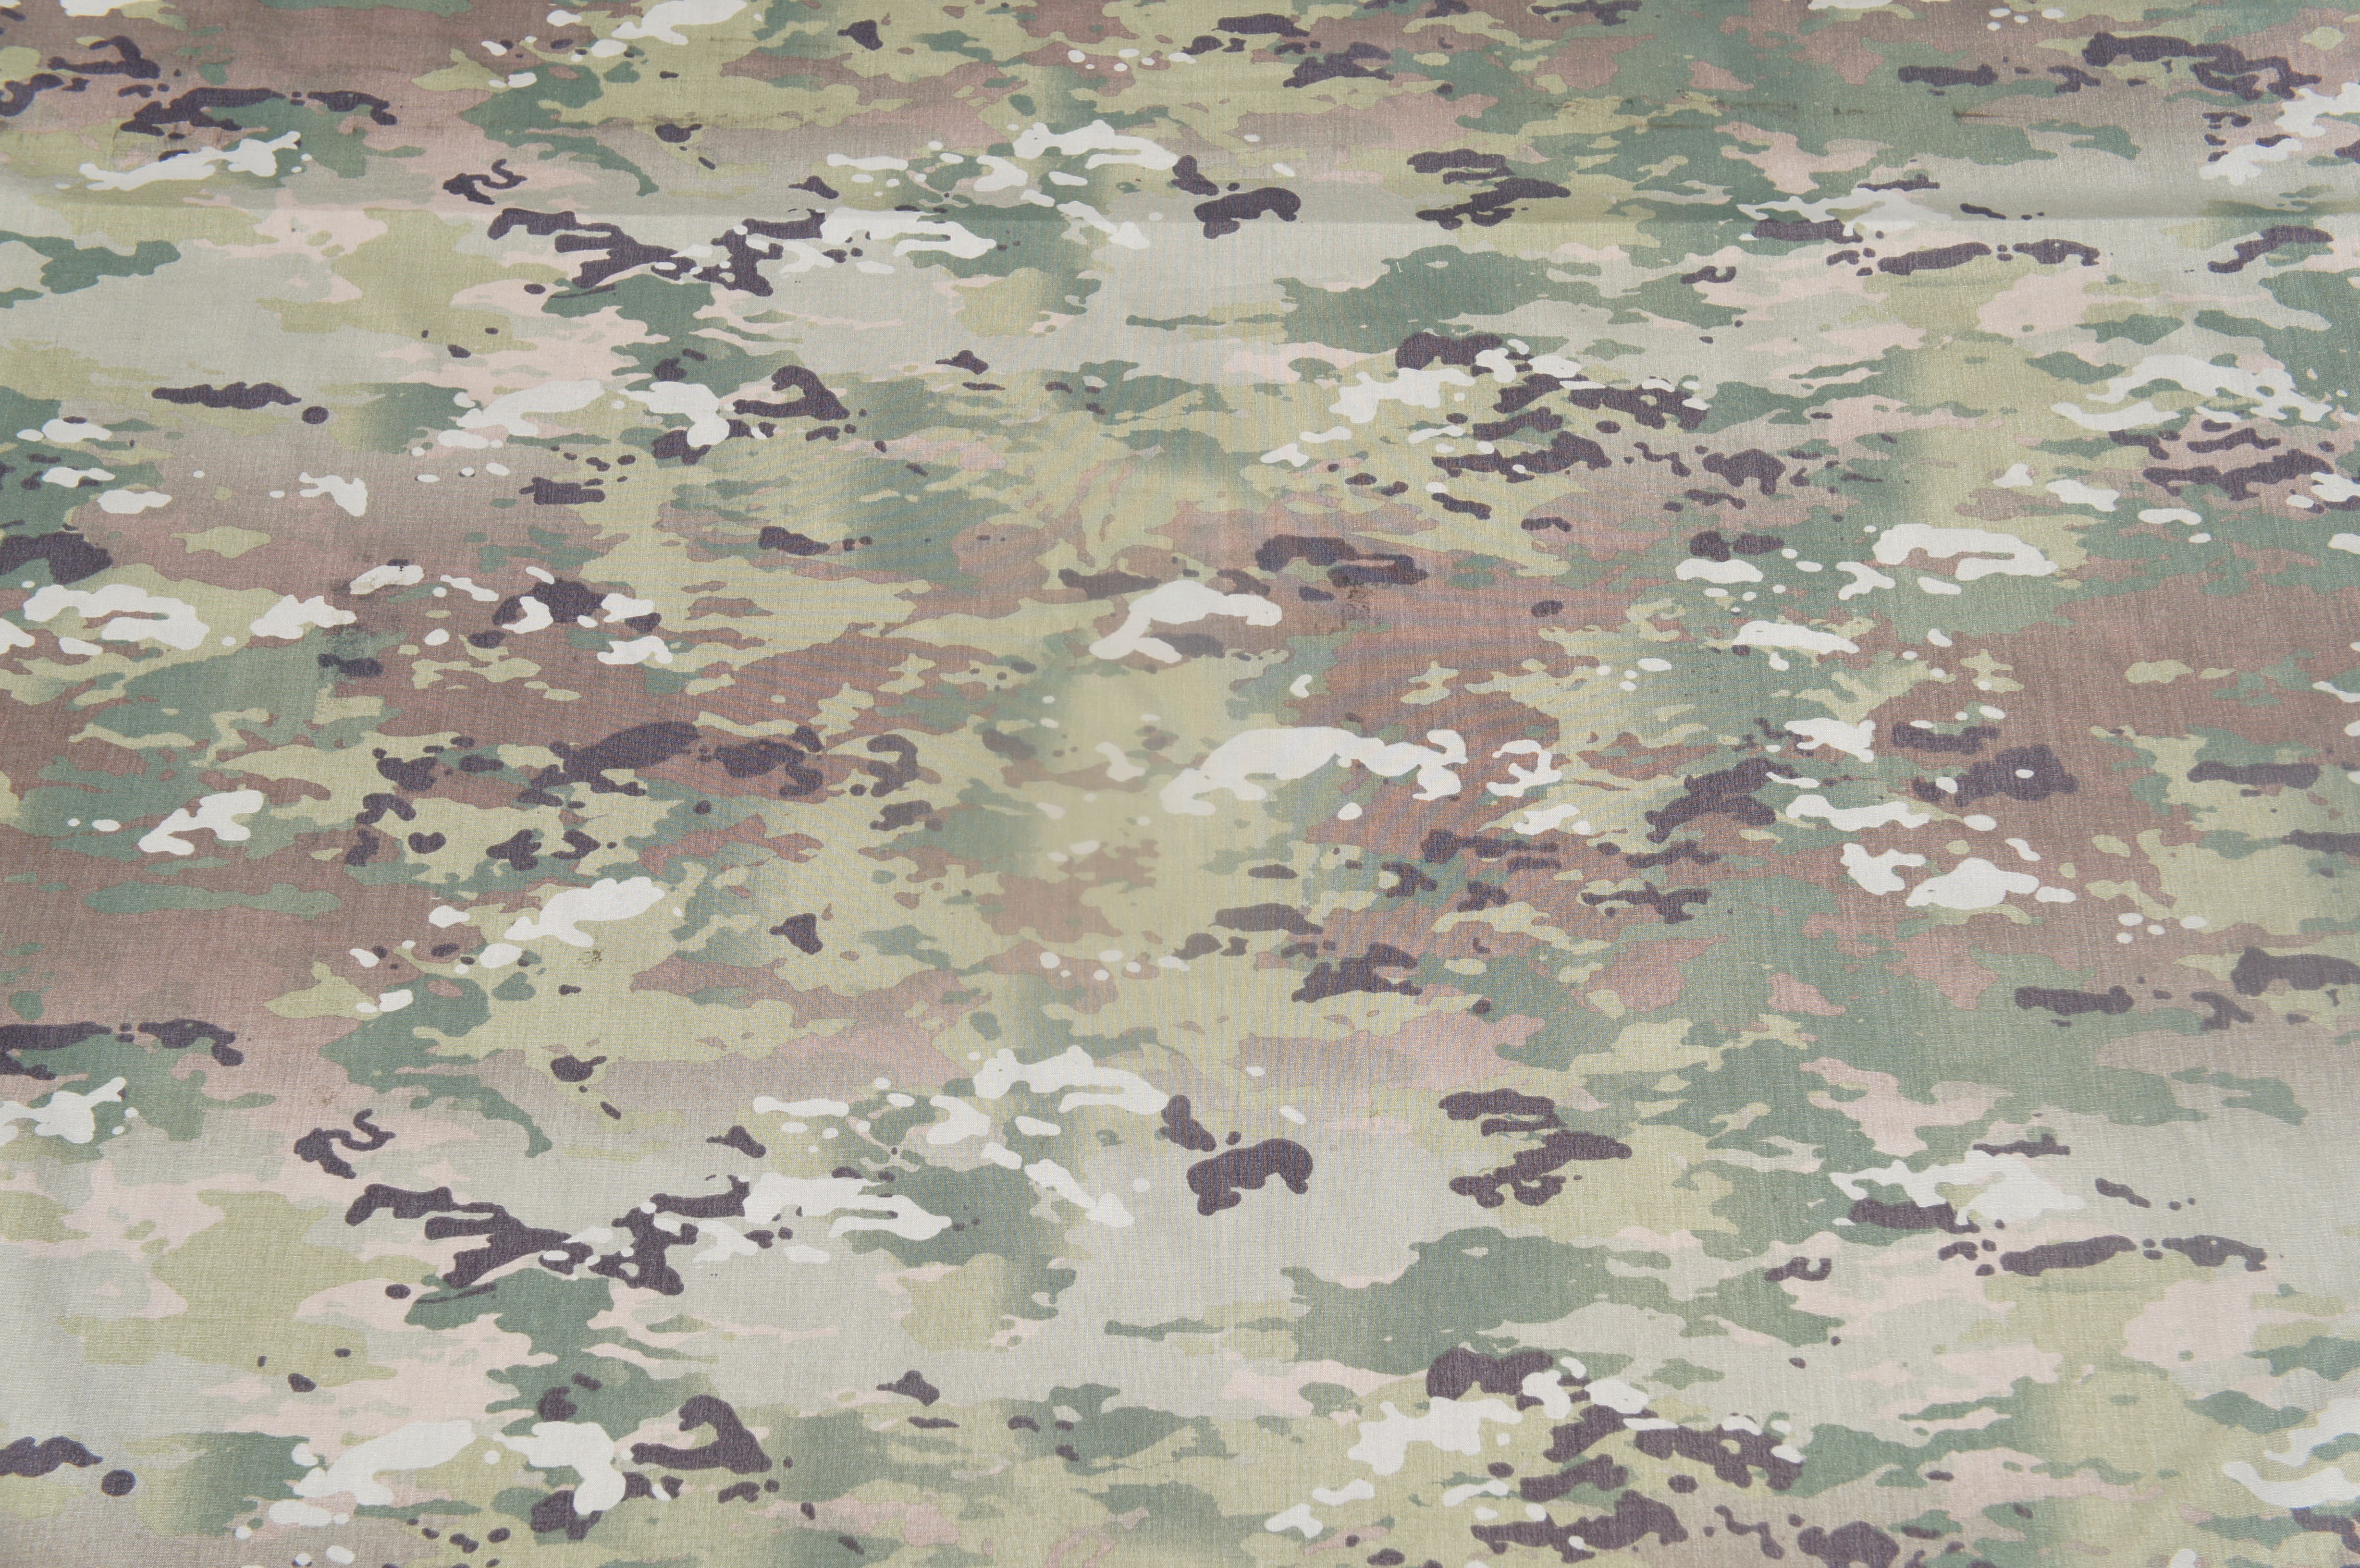 Армейский серый. Multicam камуфляж. Operational Camouflage pattern камуфляж. Multicam OCP. Камуфляж мультикам (Multicam).